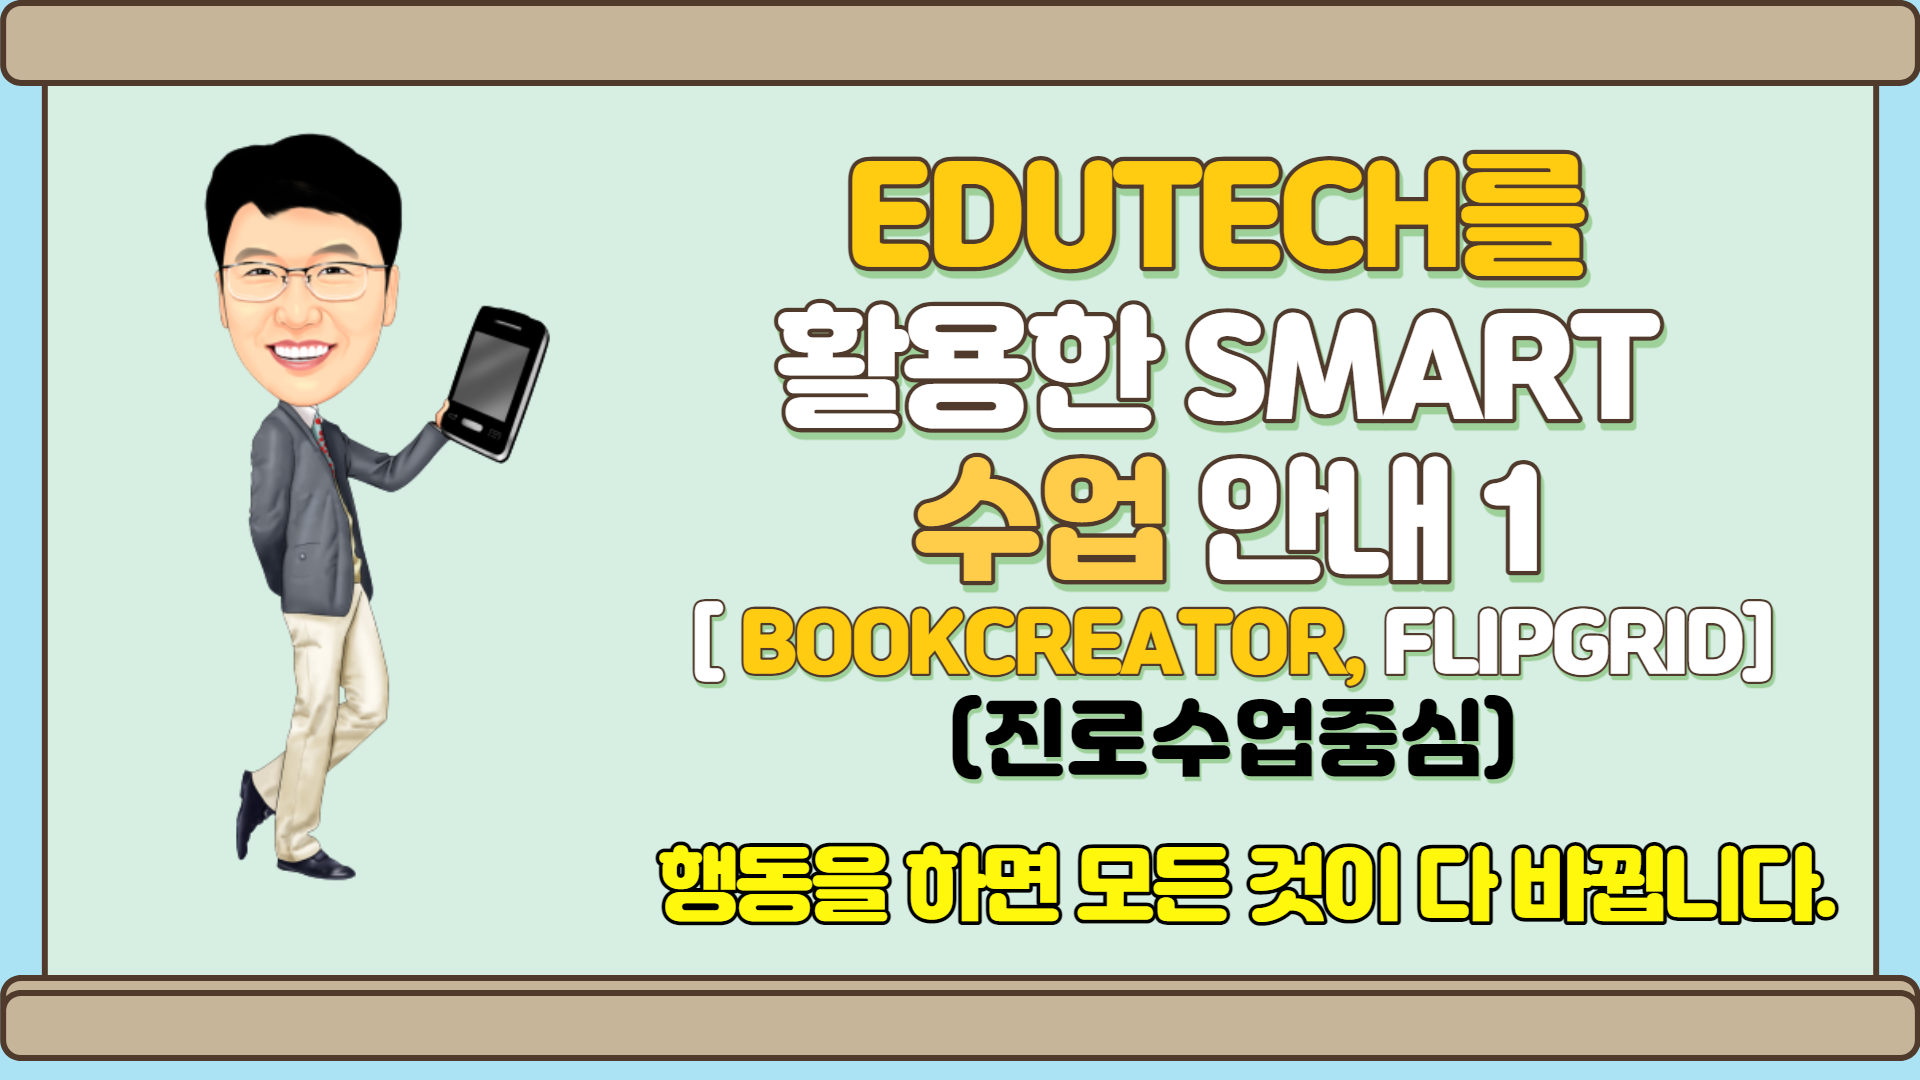 EDUTECH를 활용한 smart 수업 방법 안내 5(진로수업을 중심으로)(bookcreator, EMAZE) 19:00~20:50